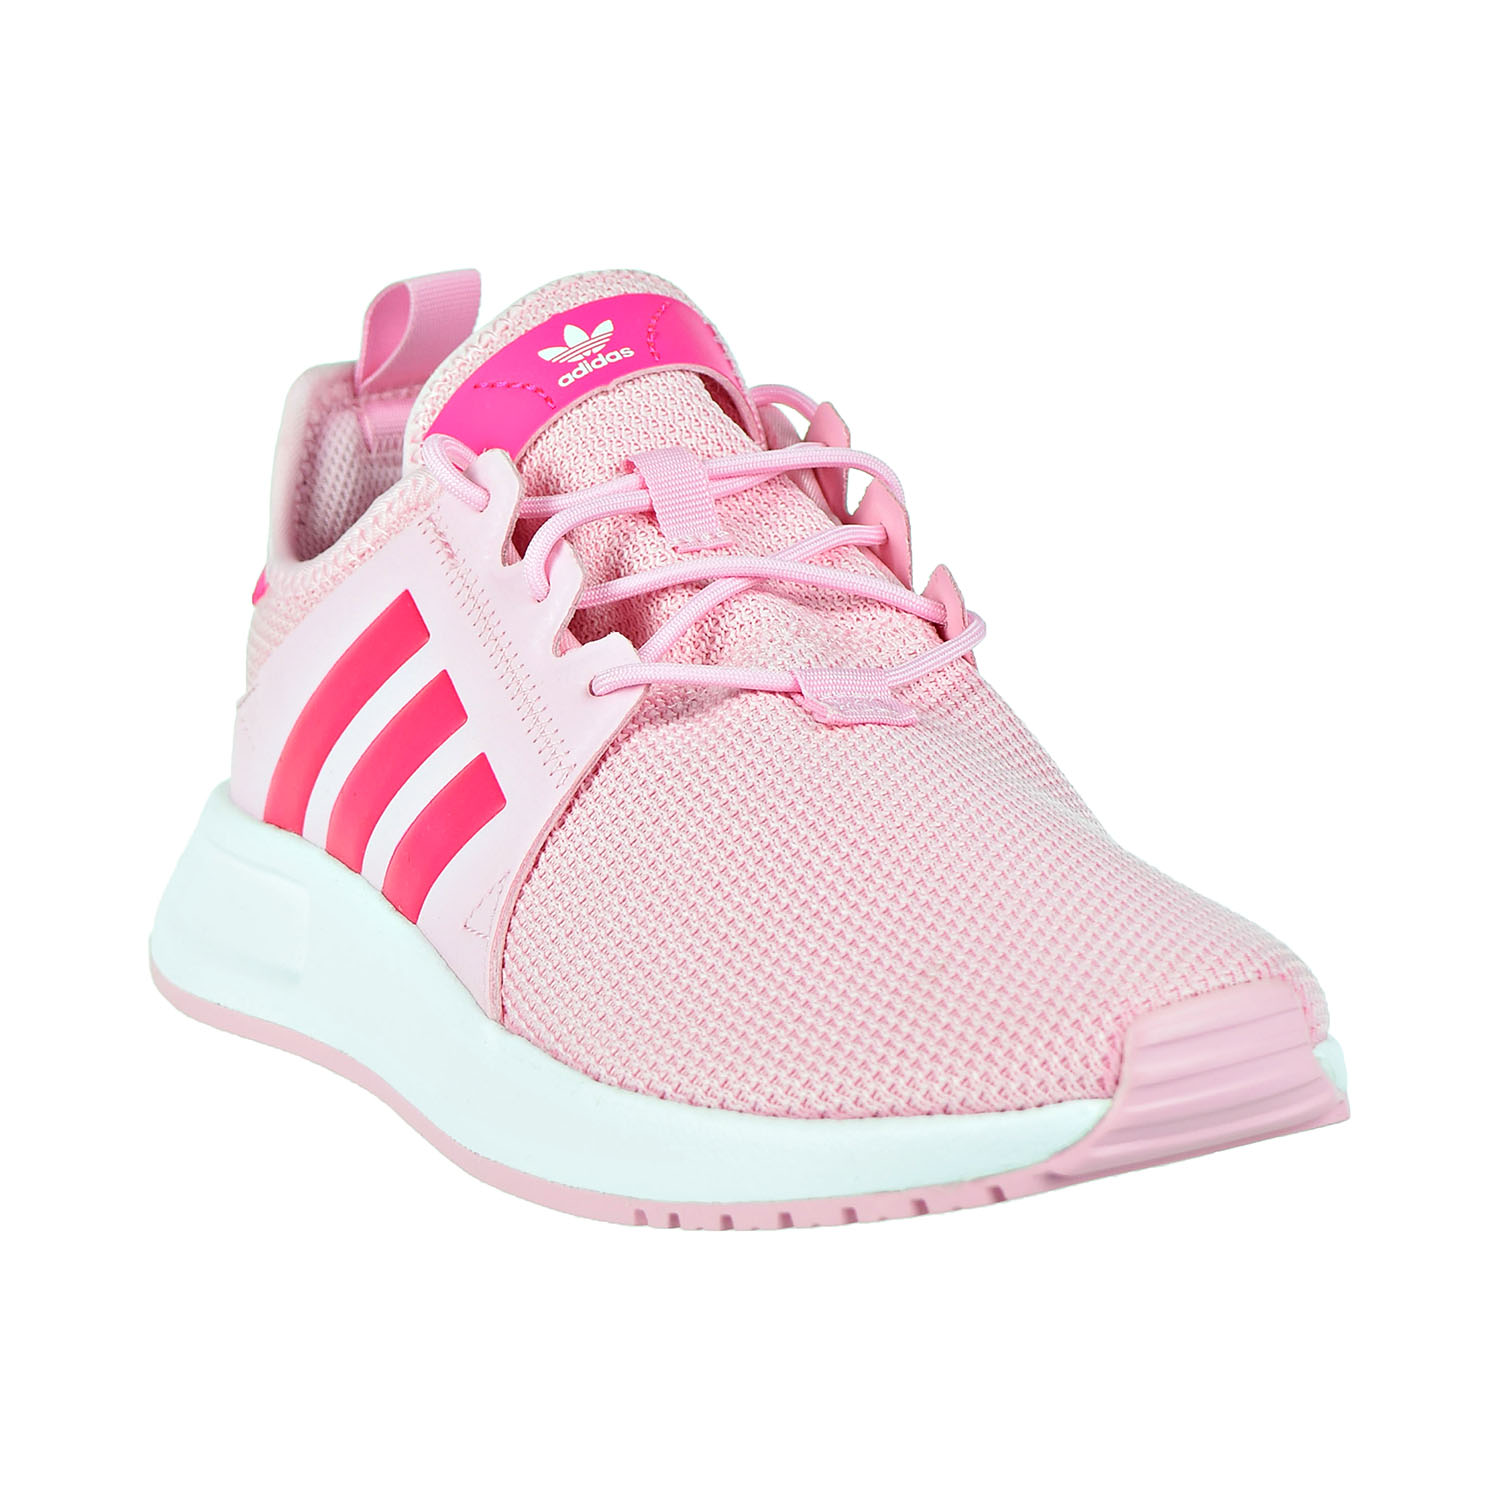 Adidas X_PLR Big Kids Shoes True Pink-Shock Pink G27281 | eBay